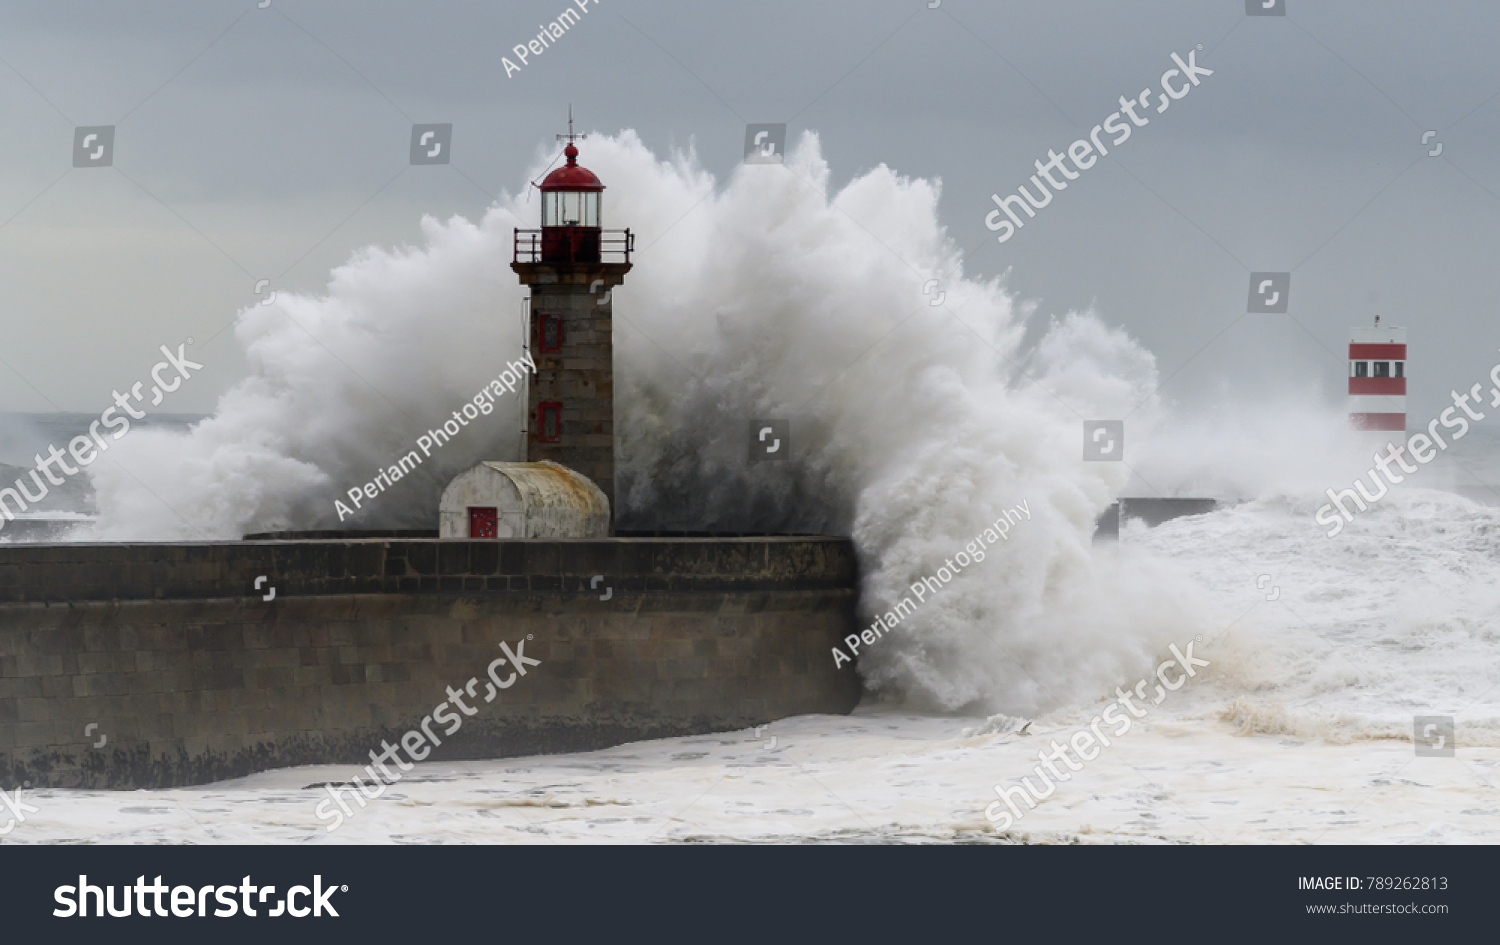 Waves crashing over a lighthouse #789262813